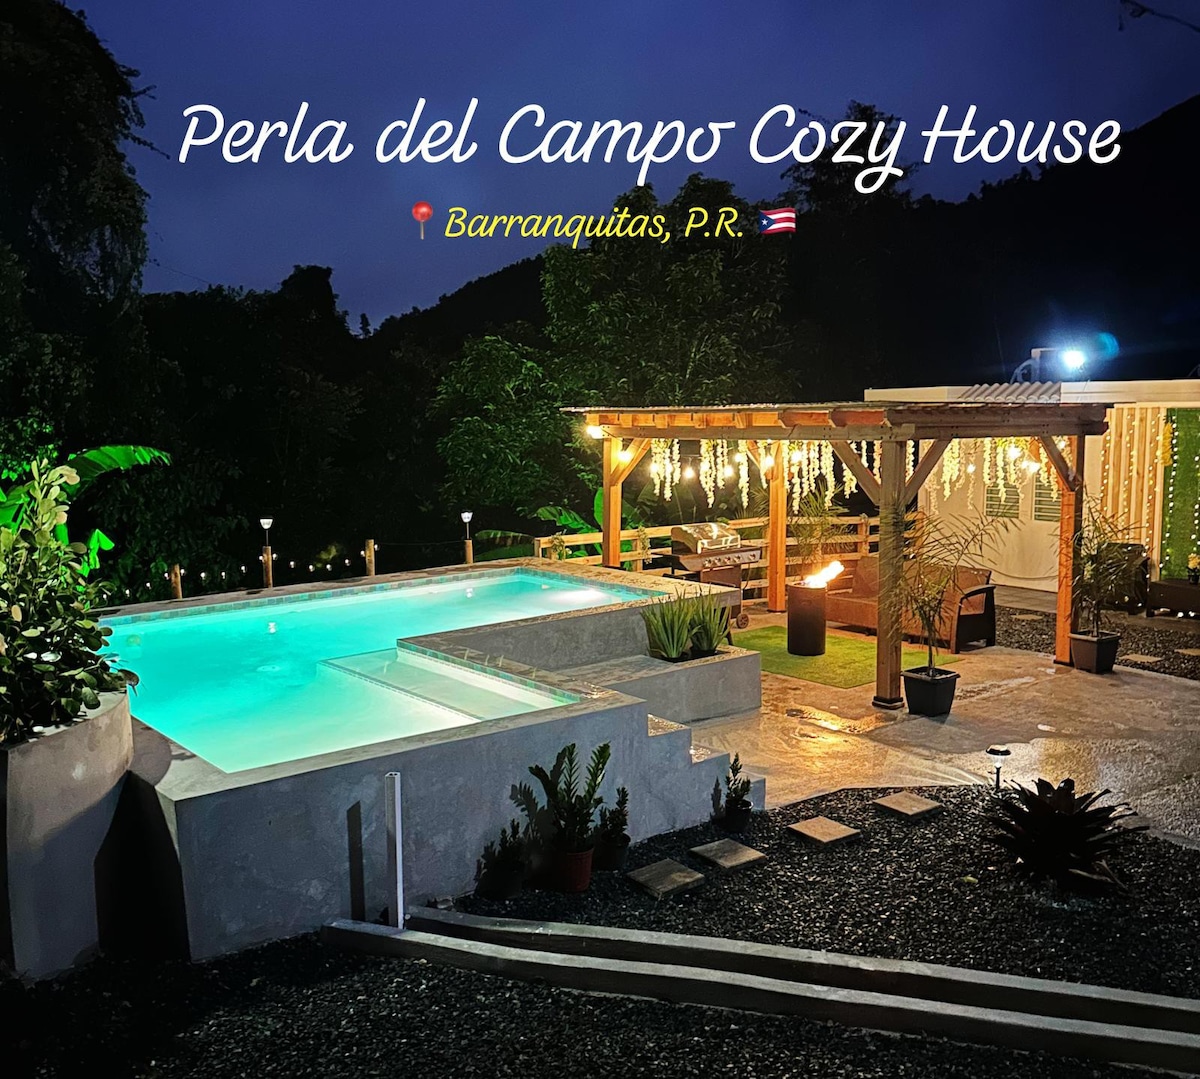 Perla del Campo Cozy House Barranquitas P.R.